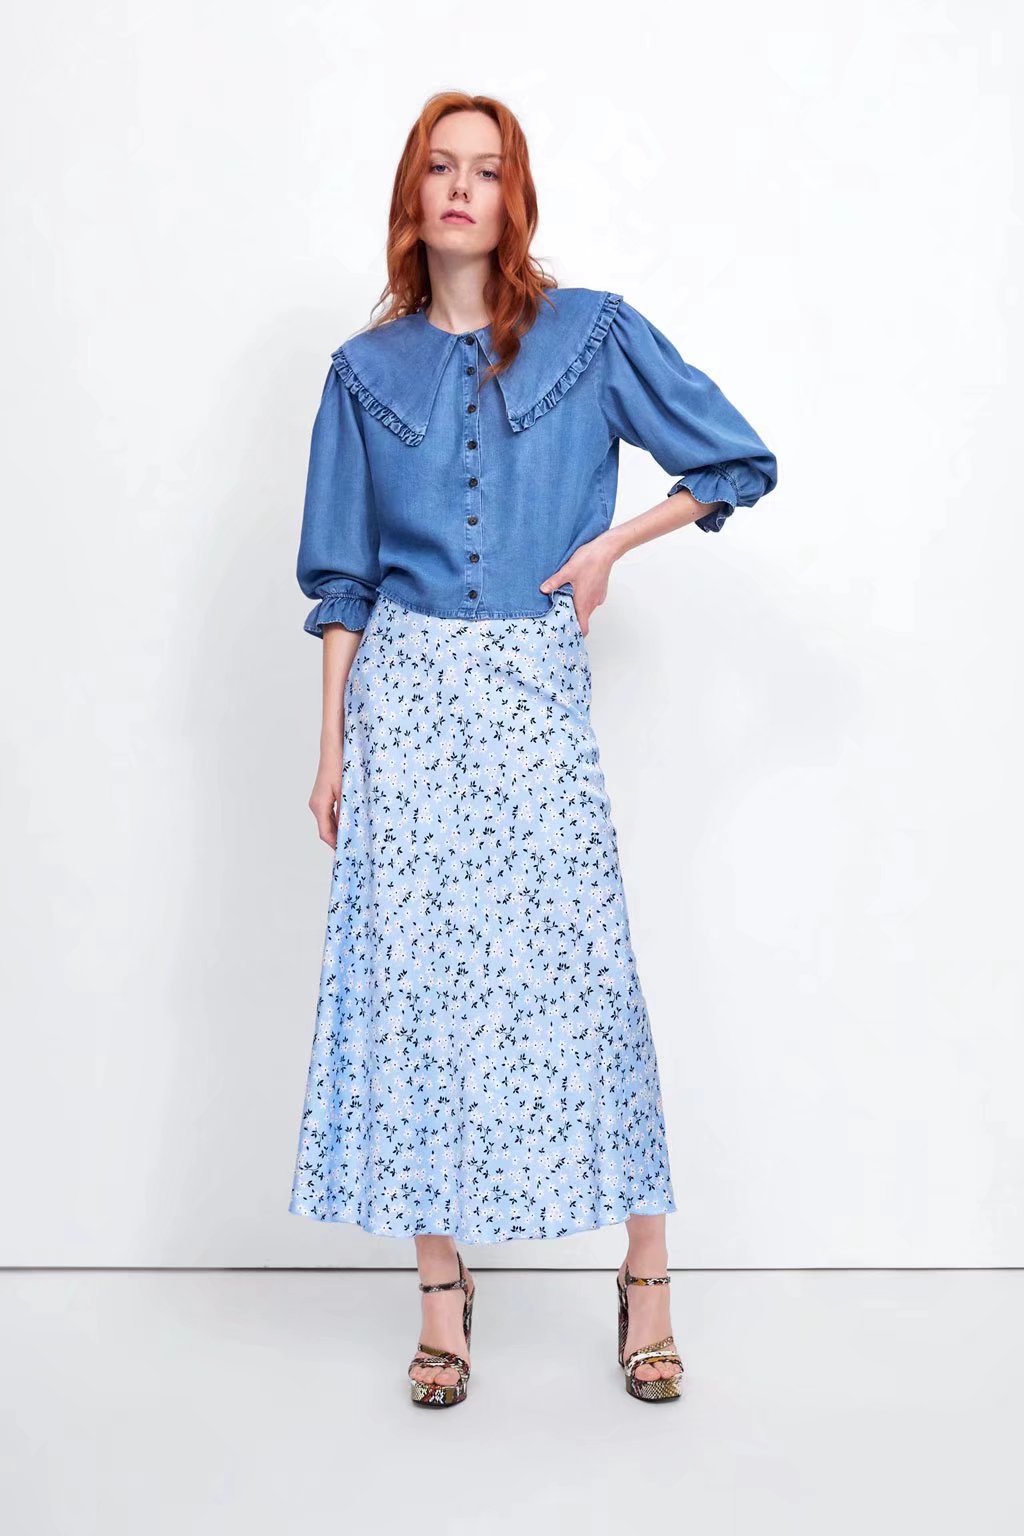 OOTDGIRL Summer Women Solid Fashion Blue Denim Shirt Vintage Ruffled Long Sleeve Single-Breasted Lapel Female Short Blouse Chic Top